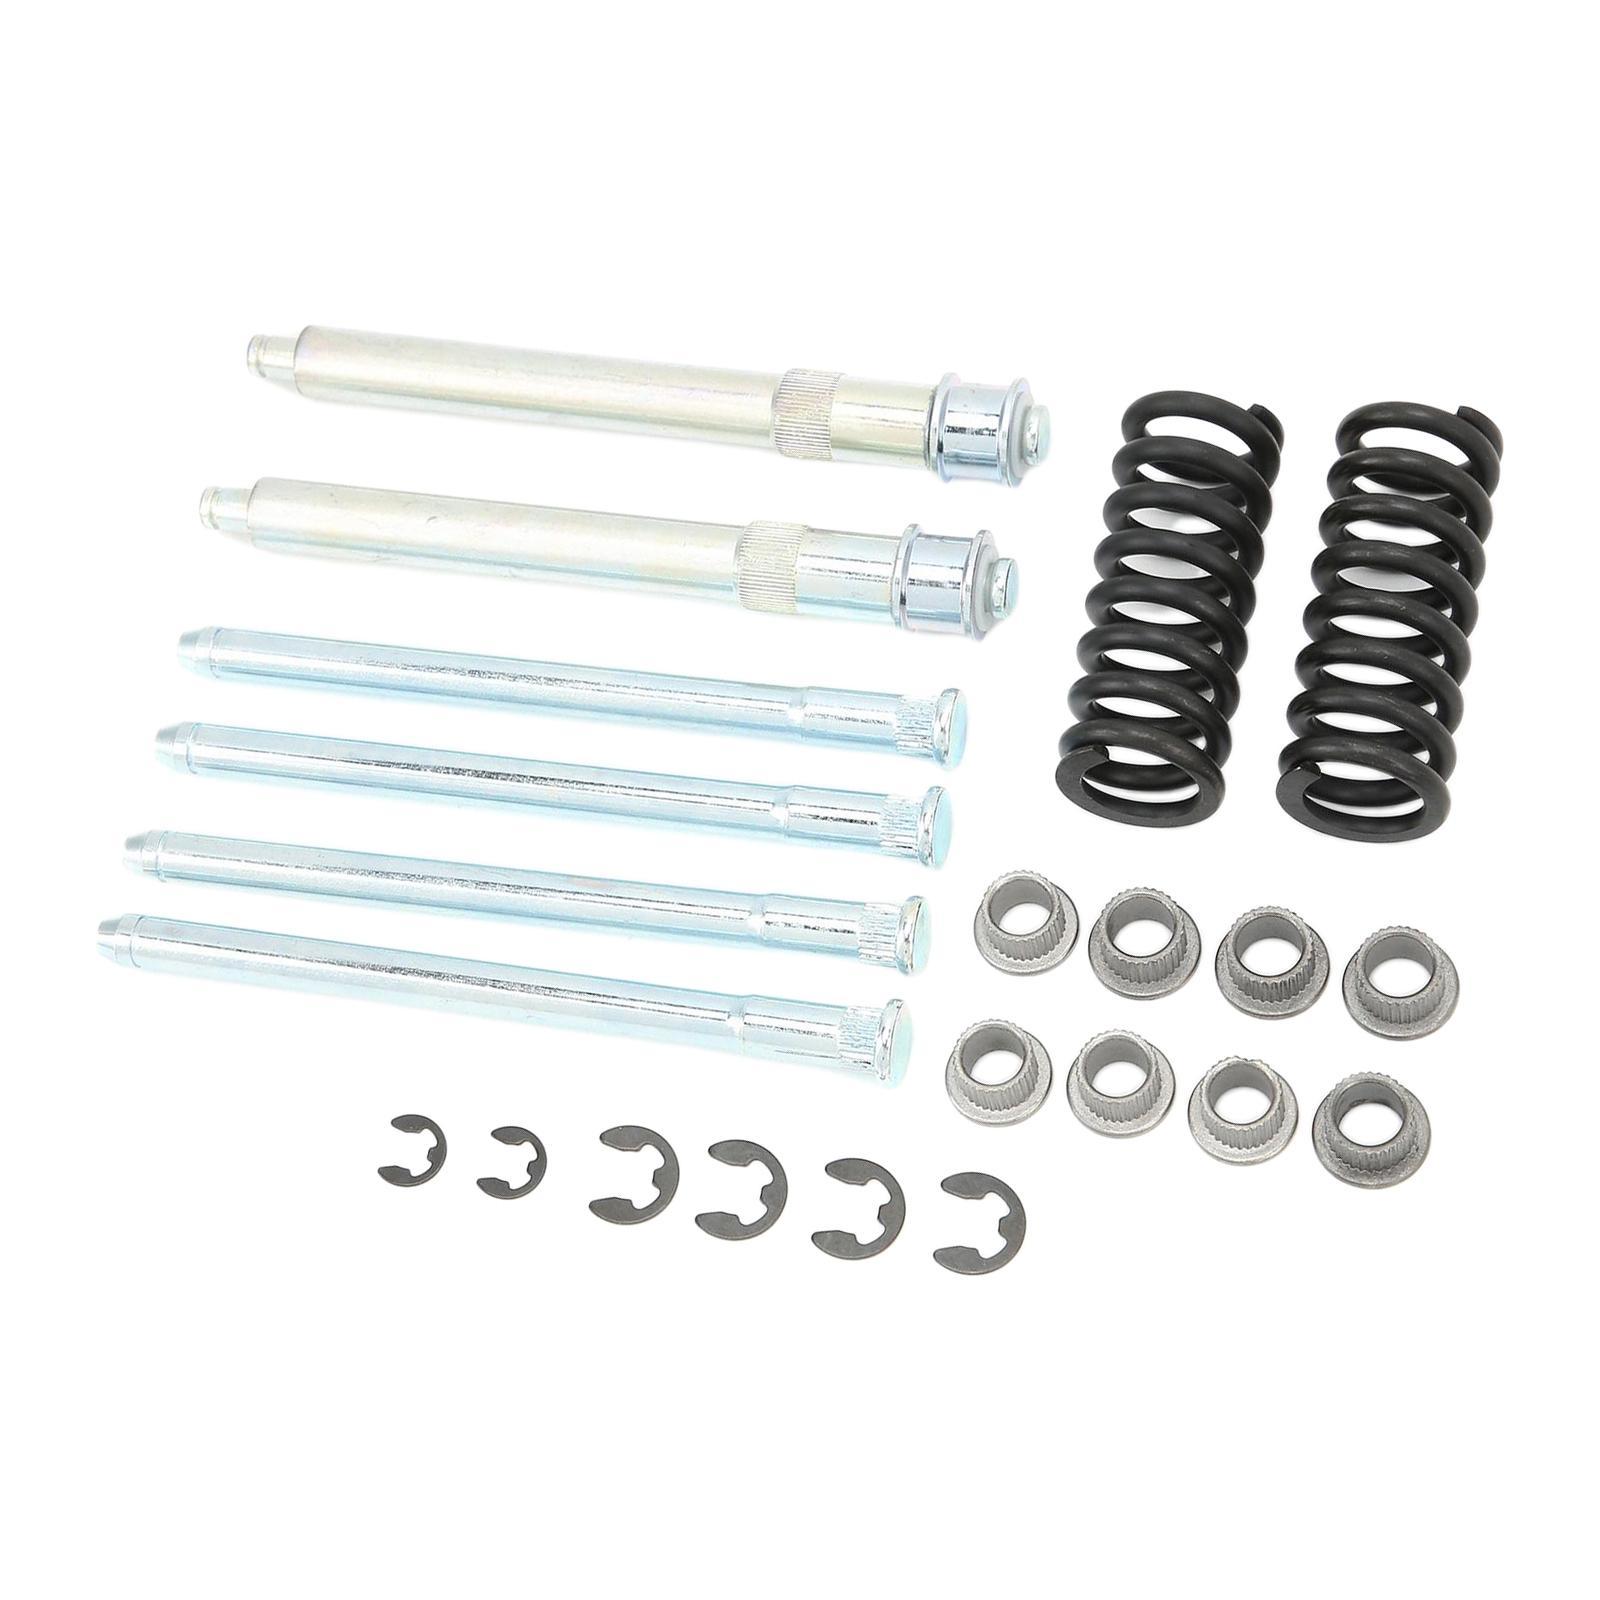 Door Hinge Pin Bushing Kit, Repair Door Hinge Pin and Spring with Bushing Kit, for Chevy GMC SUV Replacement Acc